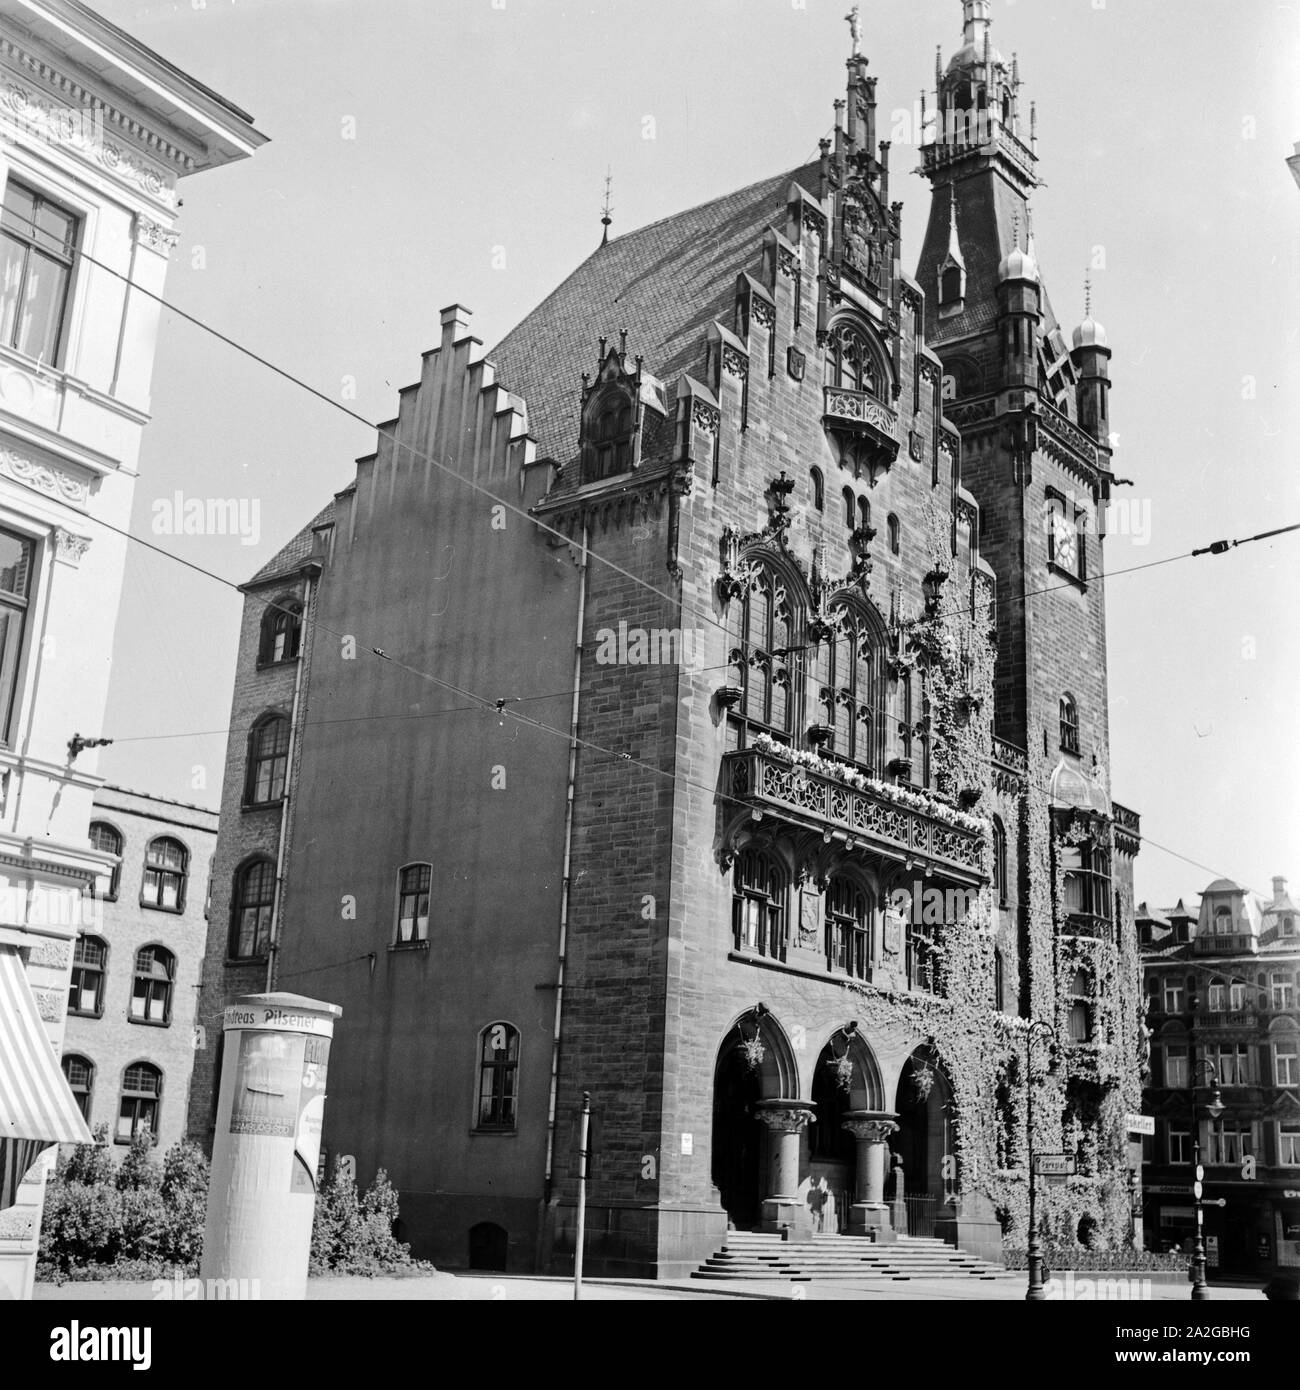 Giebel und Uhrturm am Rathaus in Wuppertal Elberfeld, Deutschland 1930er Jahre. Gable and clock tower of Elberfeld city hall, Germany 1930s. Stock Photo